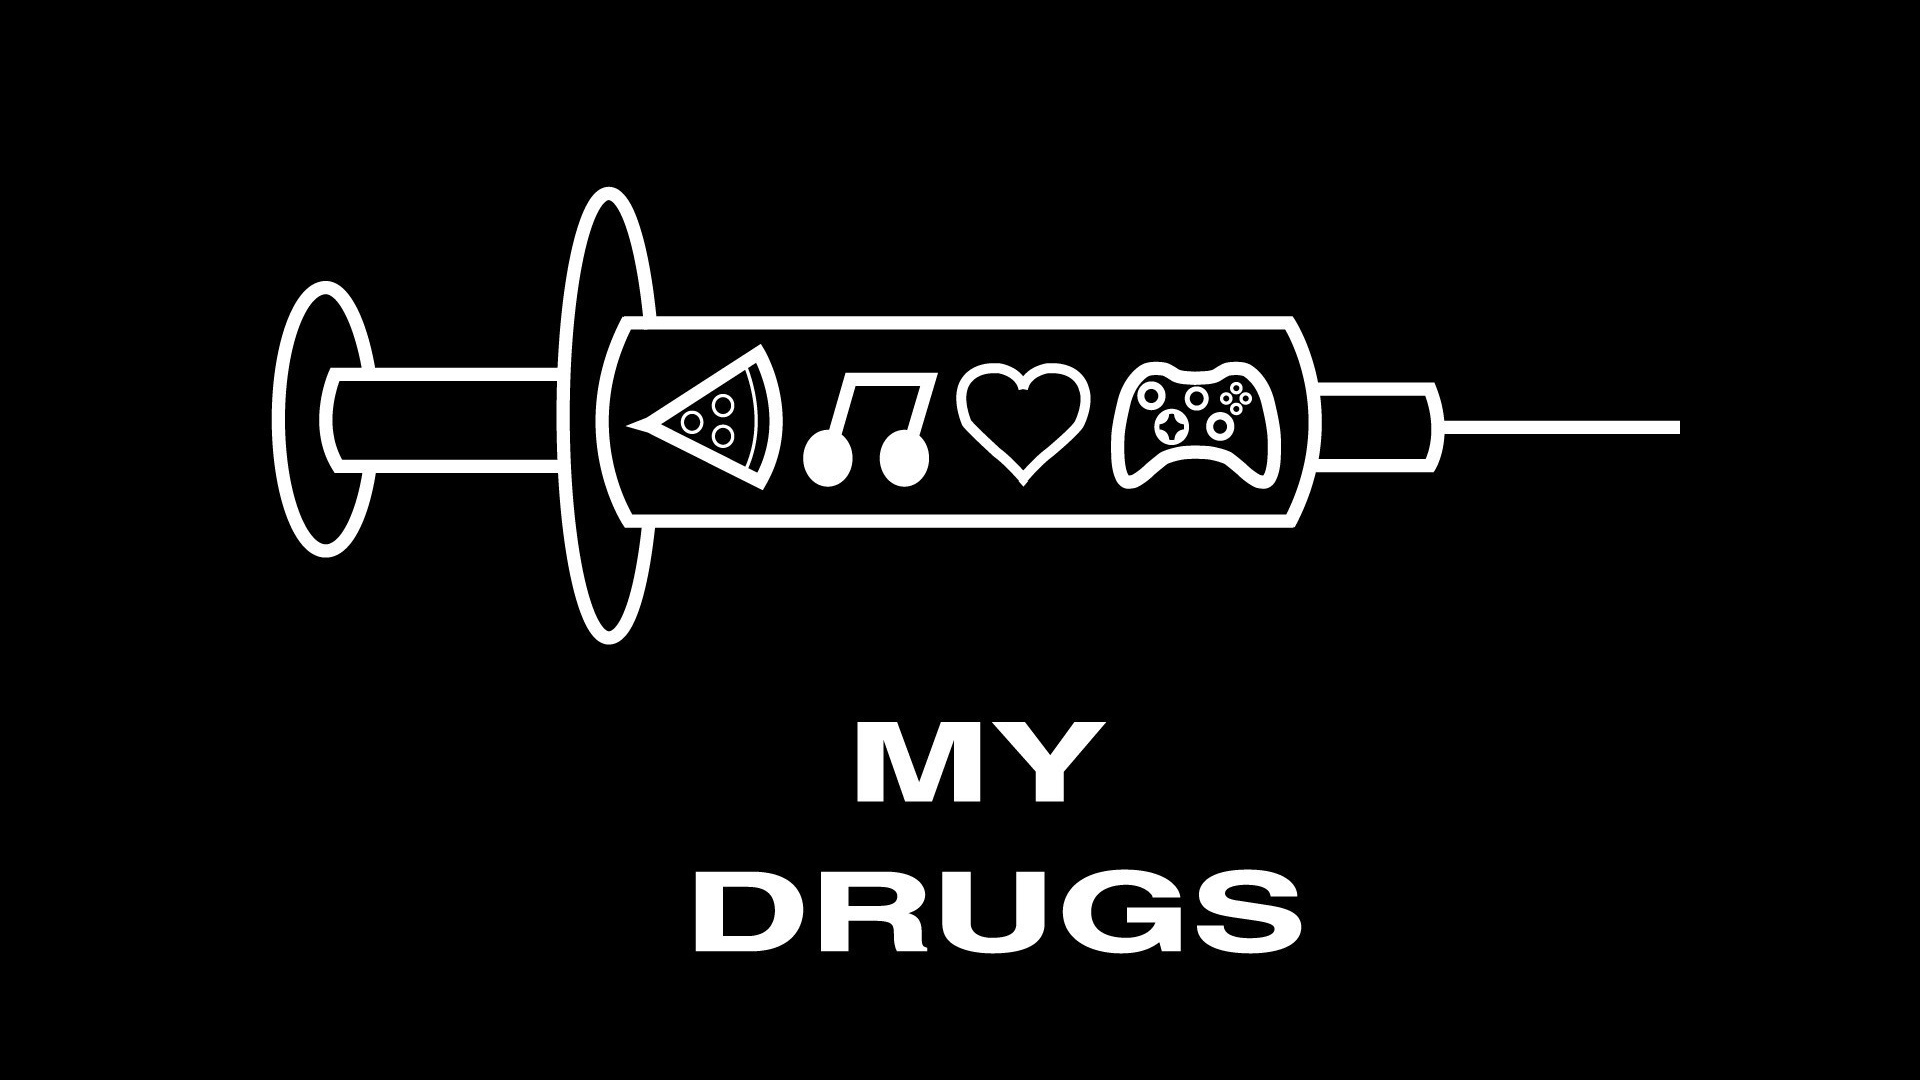 Это мои наркотики